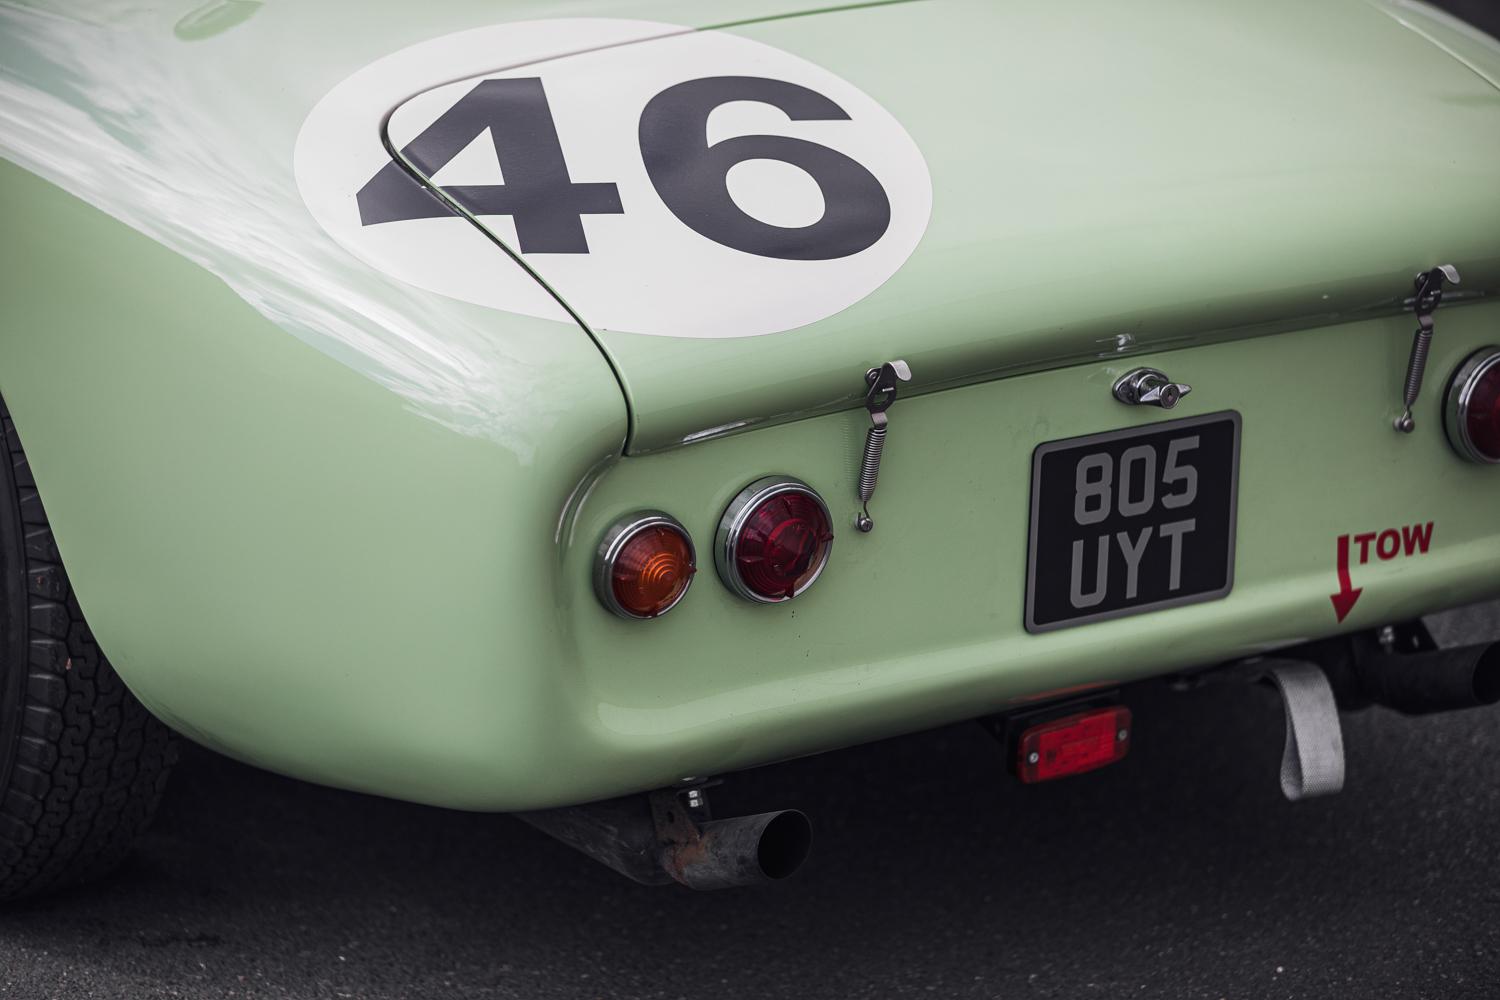 1958 Lotus Elite